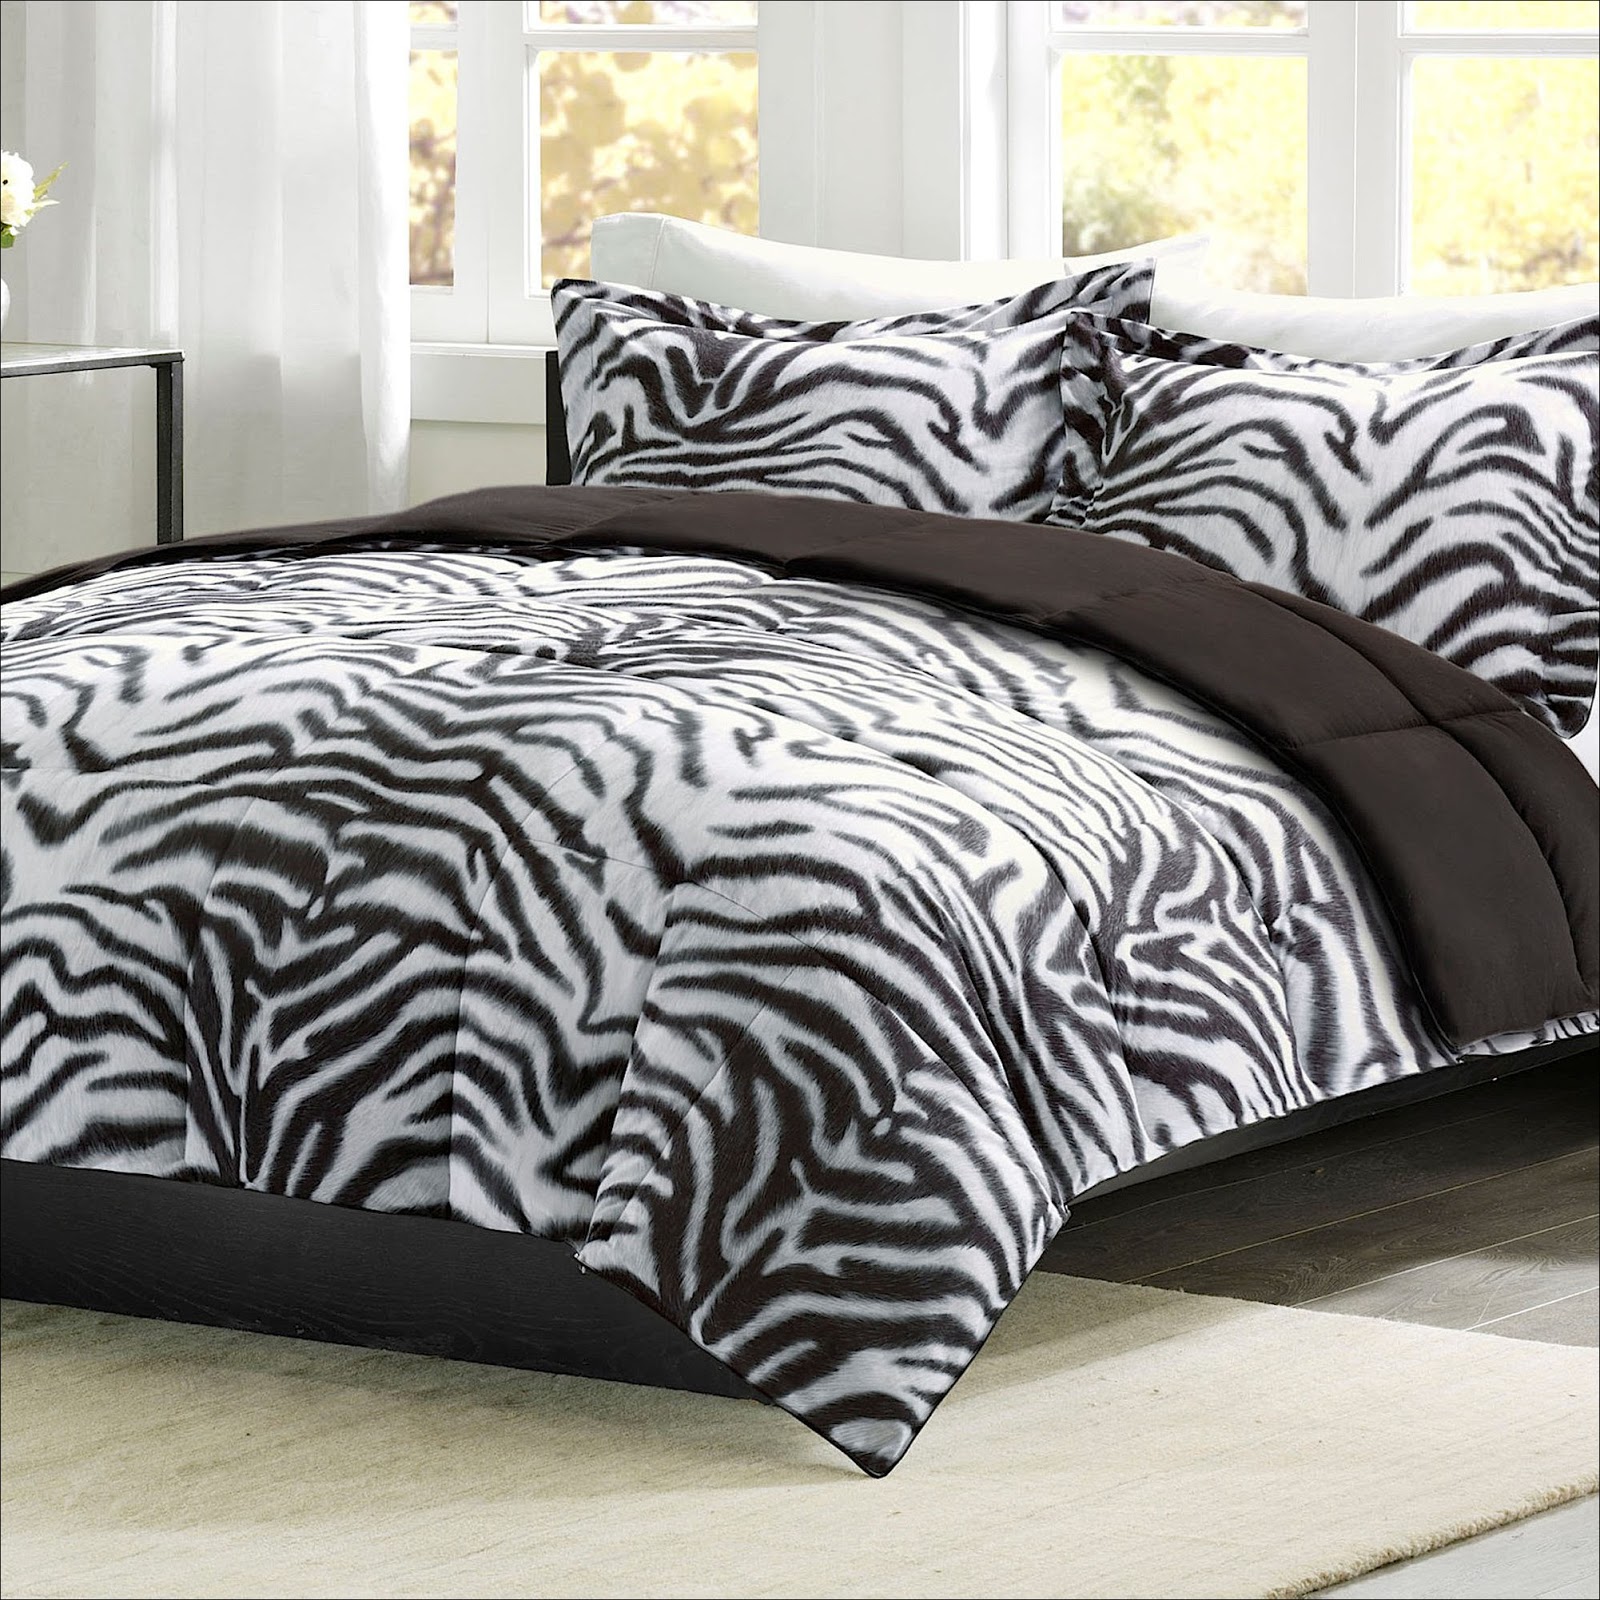 Wonderful 9 Zebra Print Bedding Sets Queen | Home Design Ideas